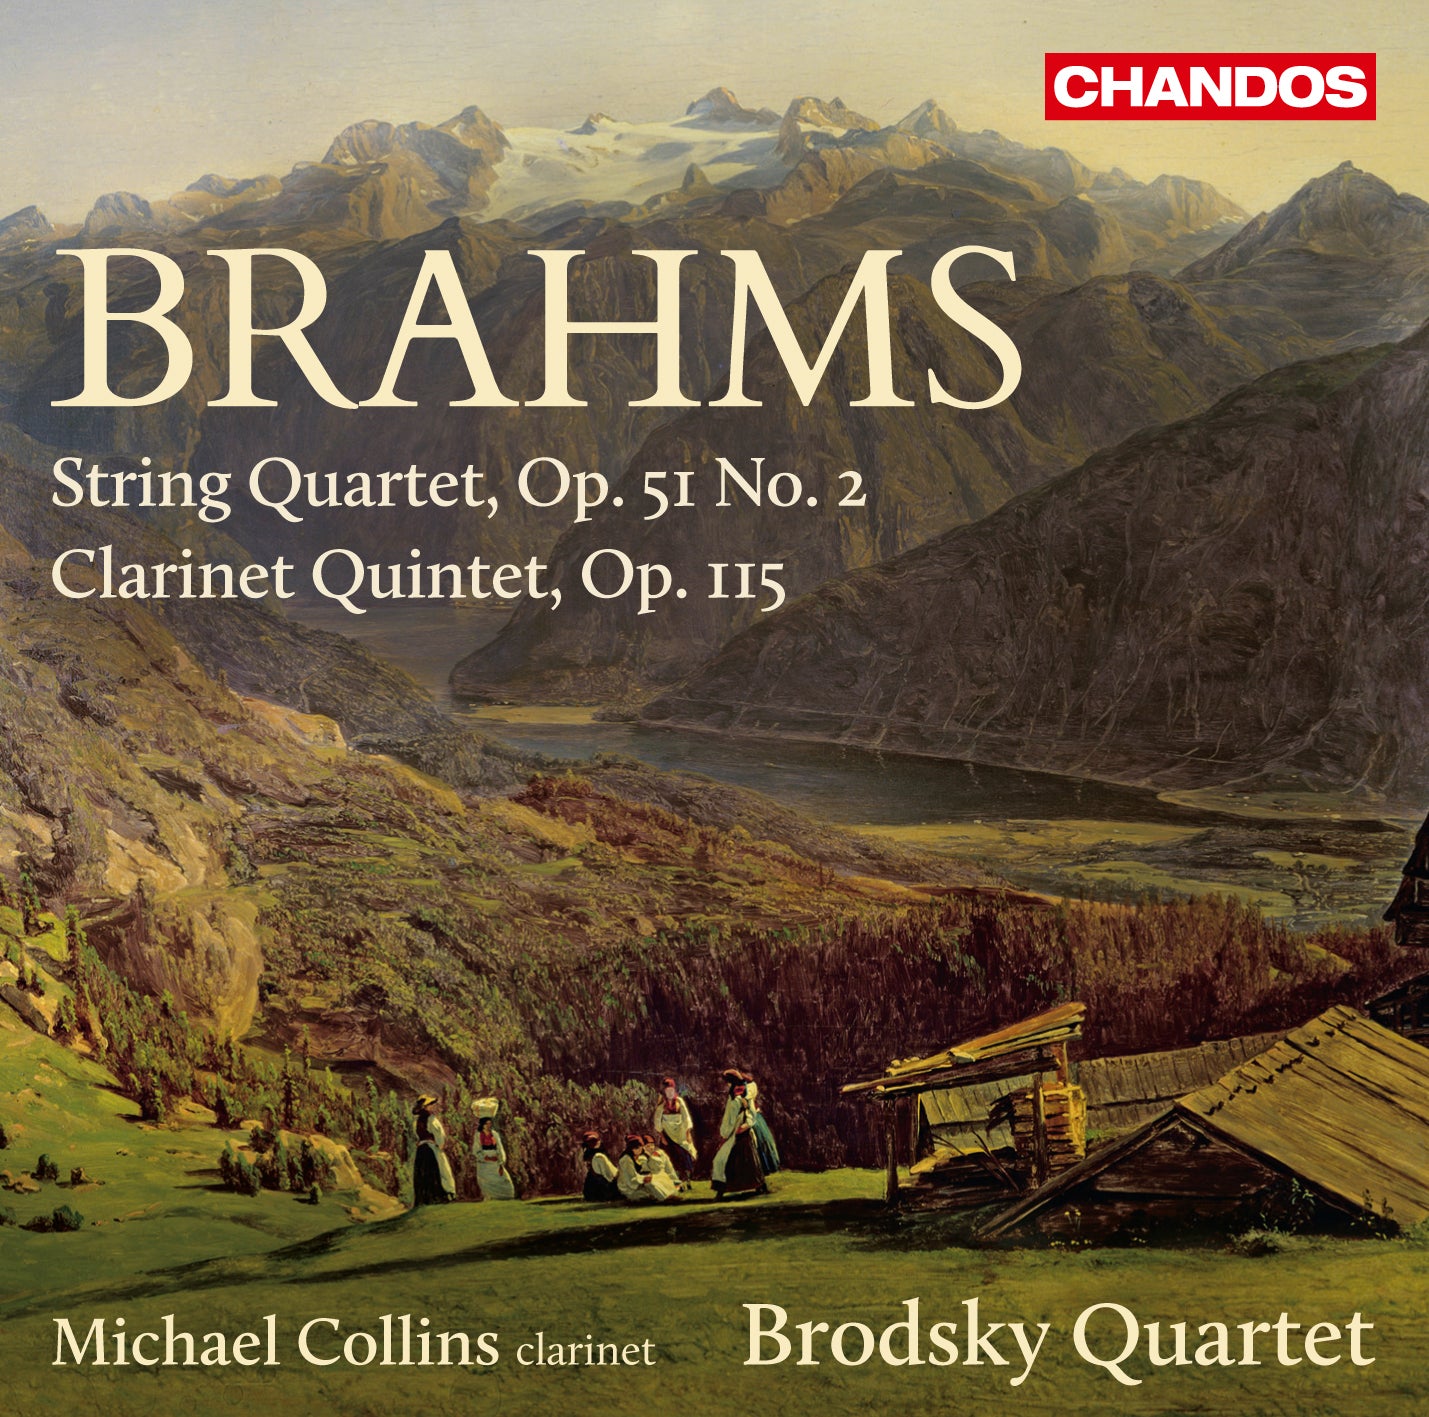 Brahms: String Quartet, Op. 51, No. 2 & Clarinet Quintet, Op